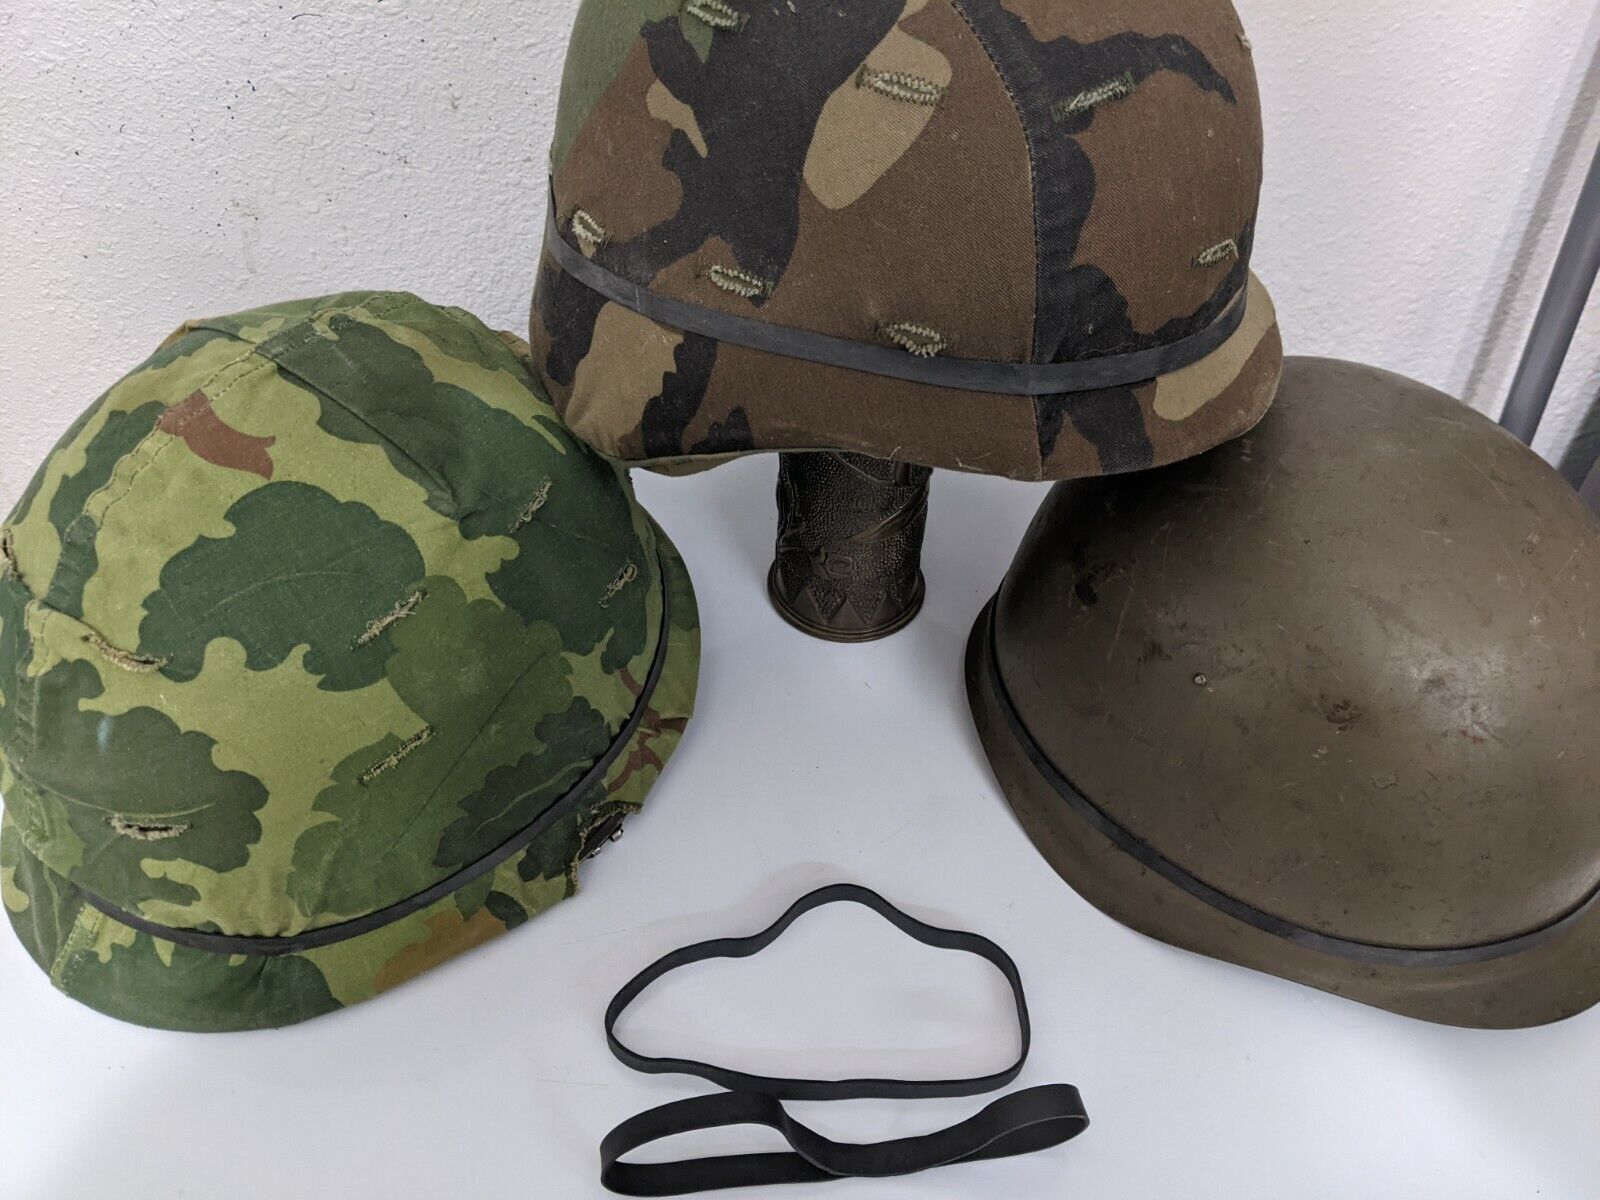 x2 Foliage Band for US Helmets Fits all helmets WW2 Vietnam Modern